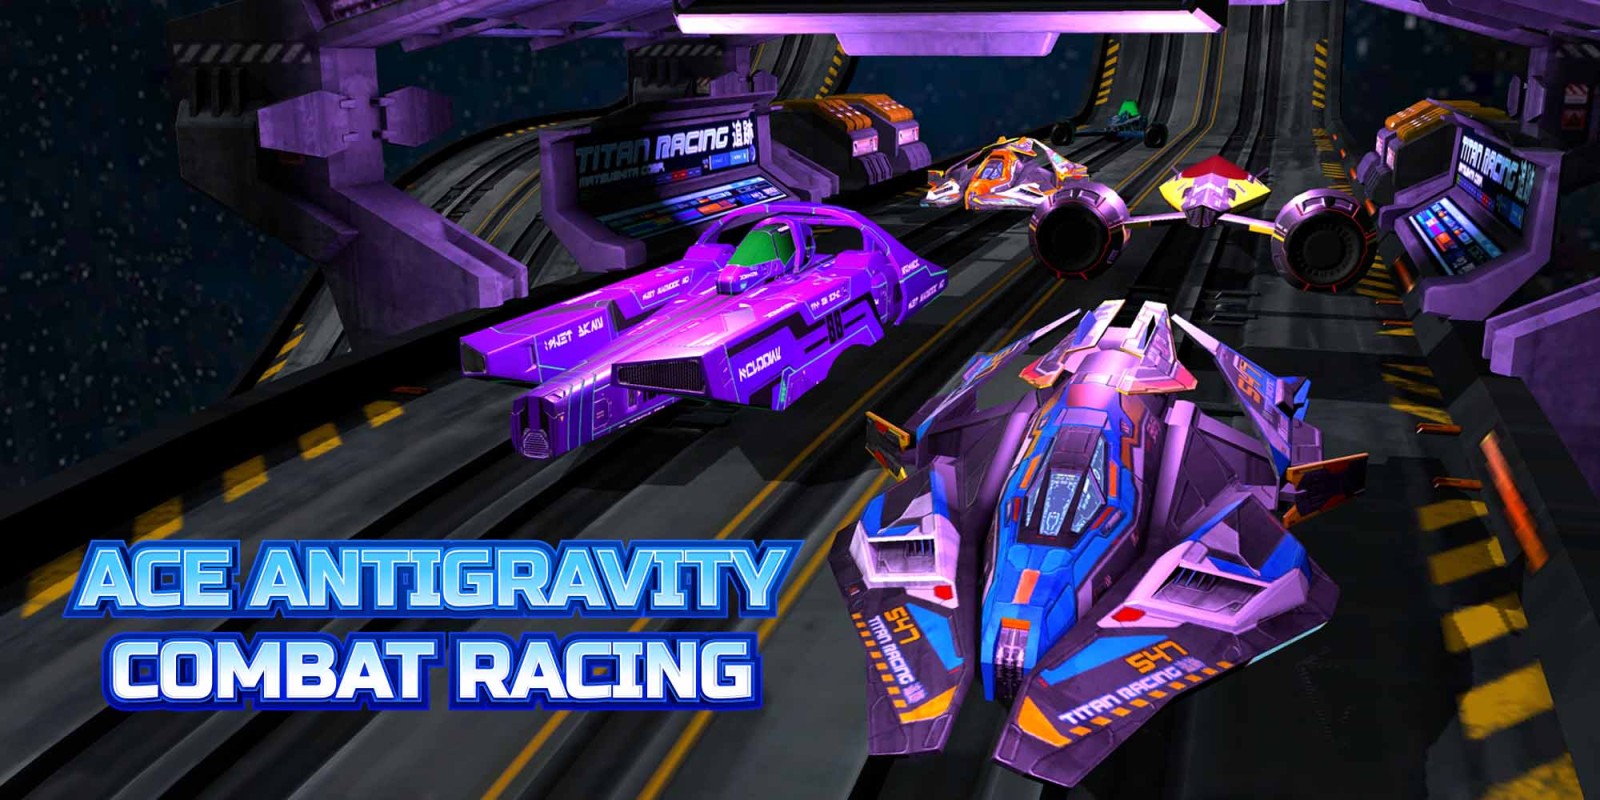 Ace Antigravity Combat Racing